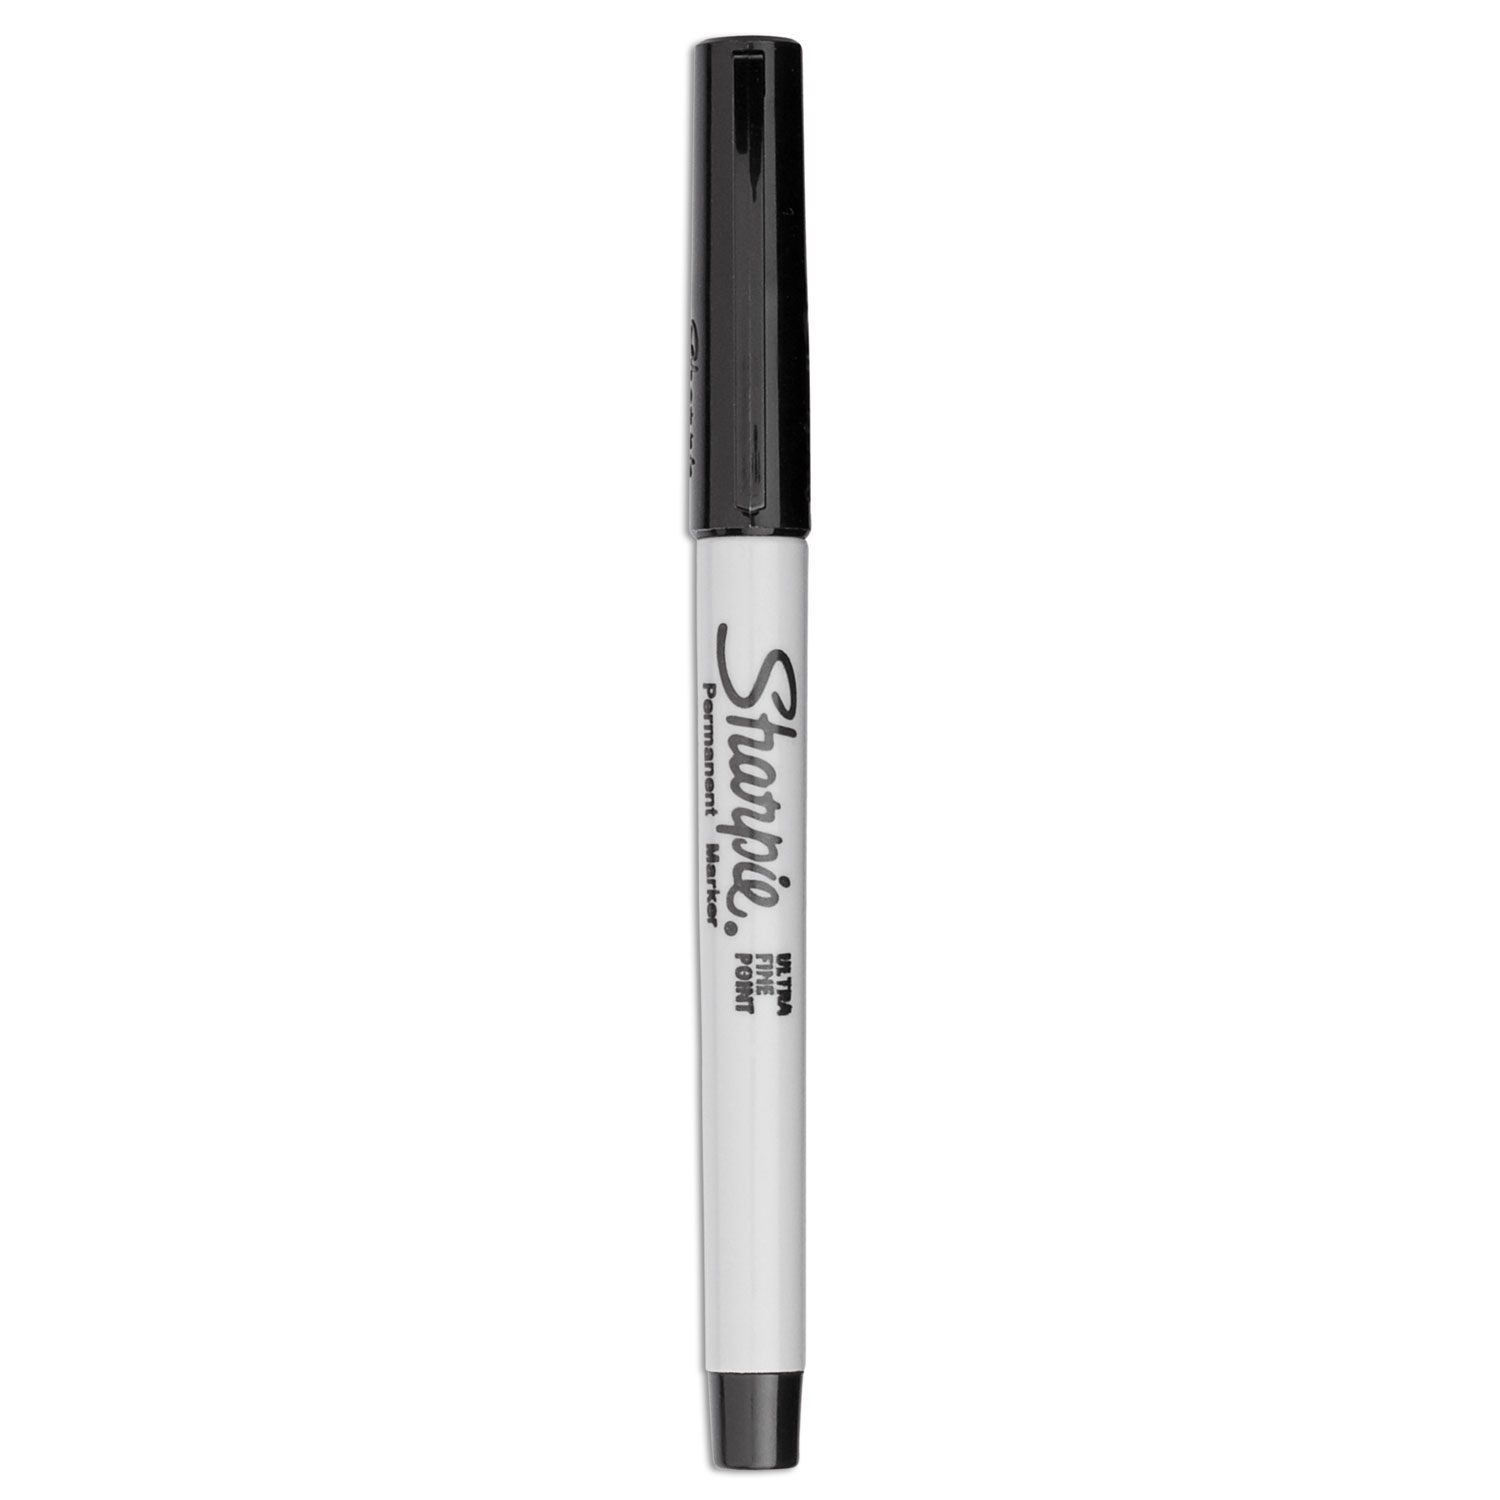 Sharpie 37001 Black Ultra-Fine Point Permanent Marker - 12/Pack